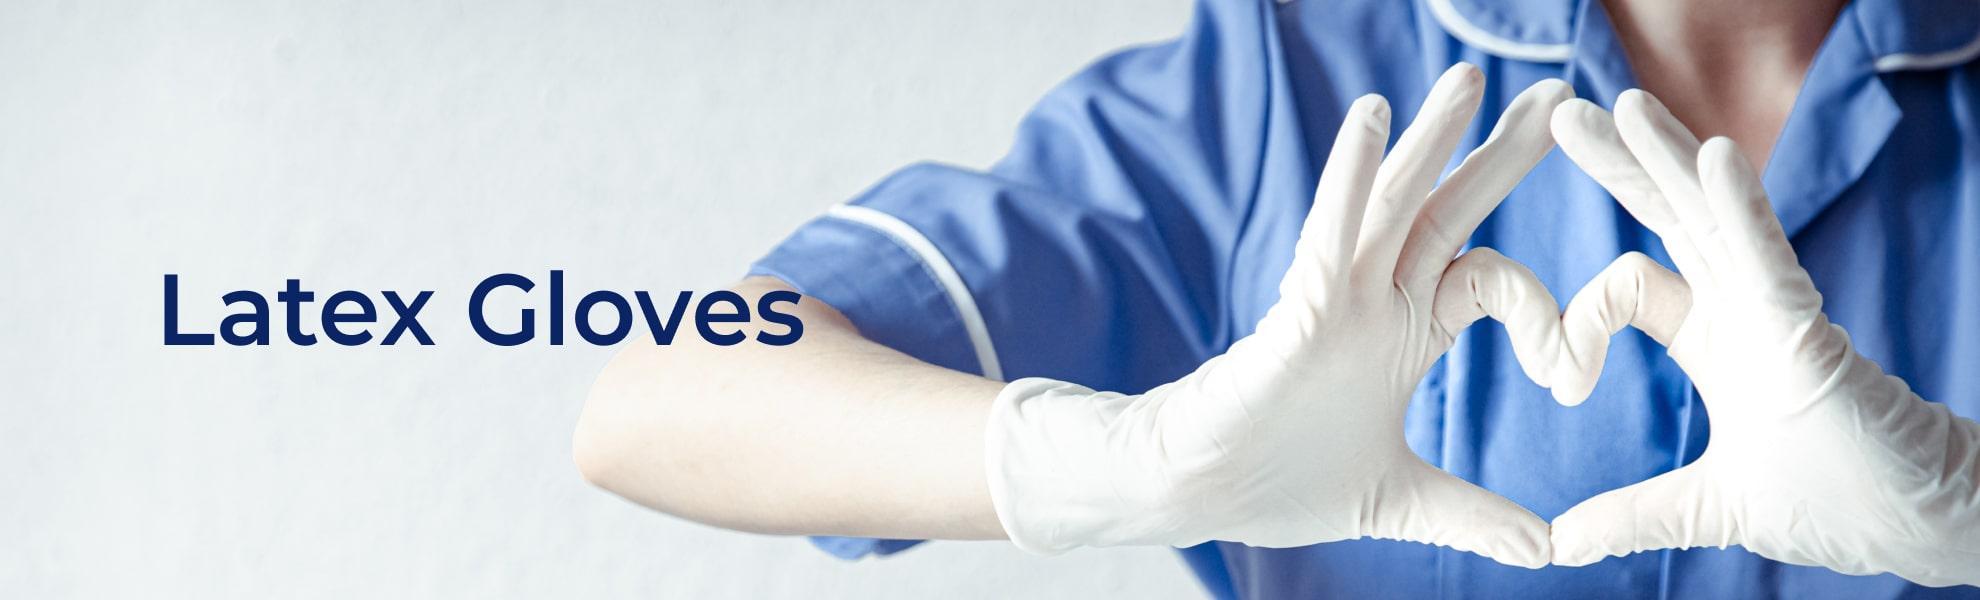 Medical Gloves, Latex Gloves, Nitrile Gloves, Disposable Gloves, Surgical Gloves